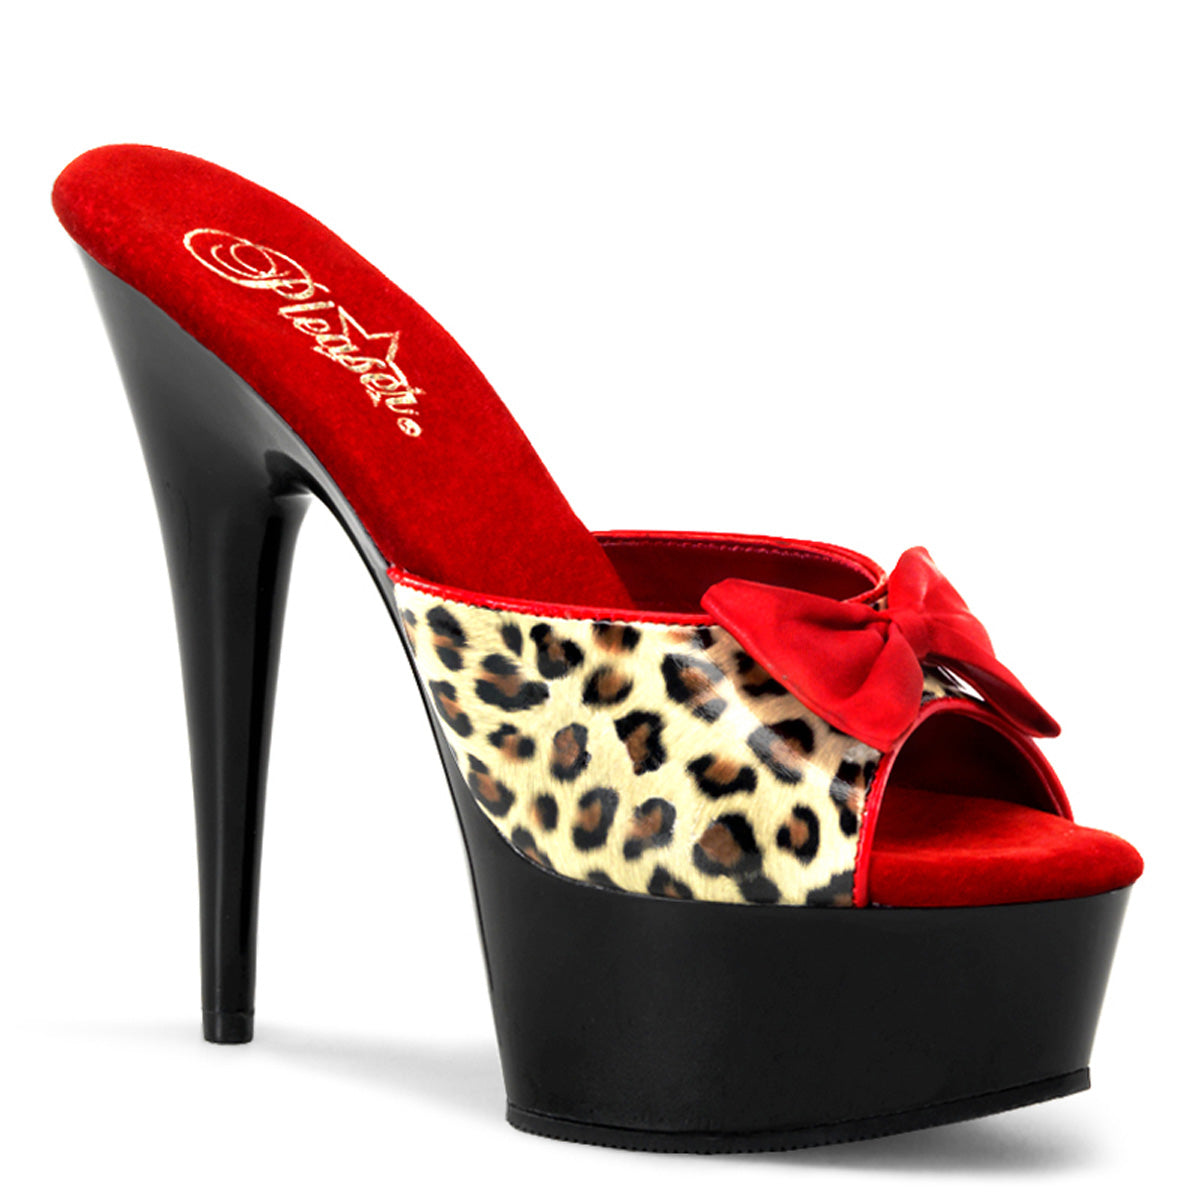 DELIGHT-601-6 6" Heel Tan Leopard Print Pole Dancer Shoes-Pleaser- Sexy Shoes